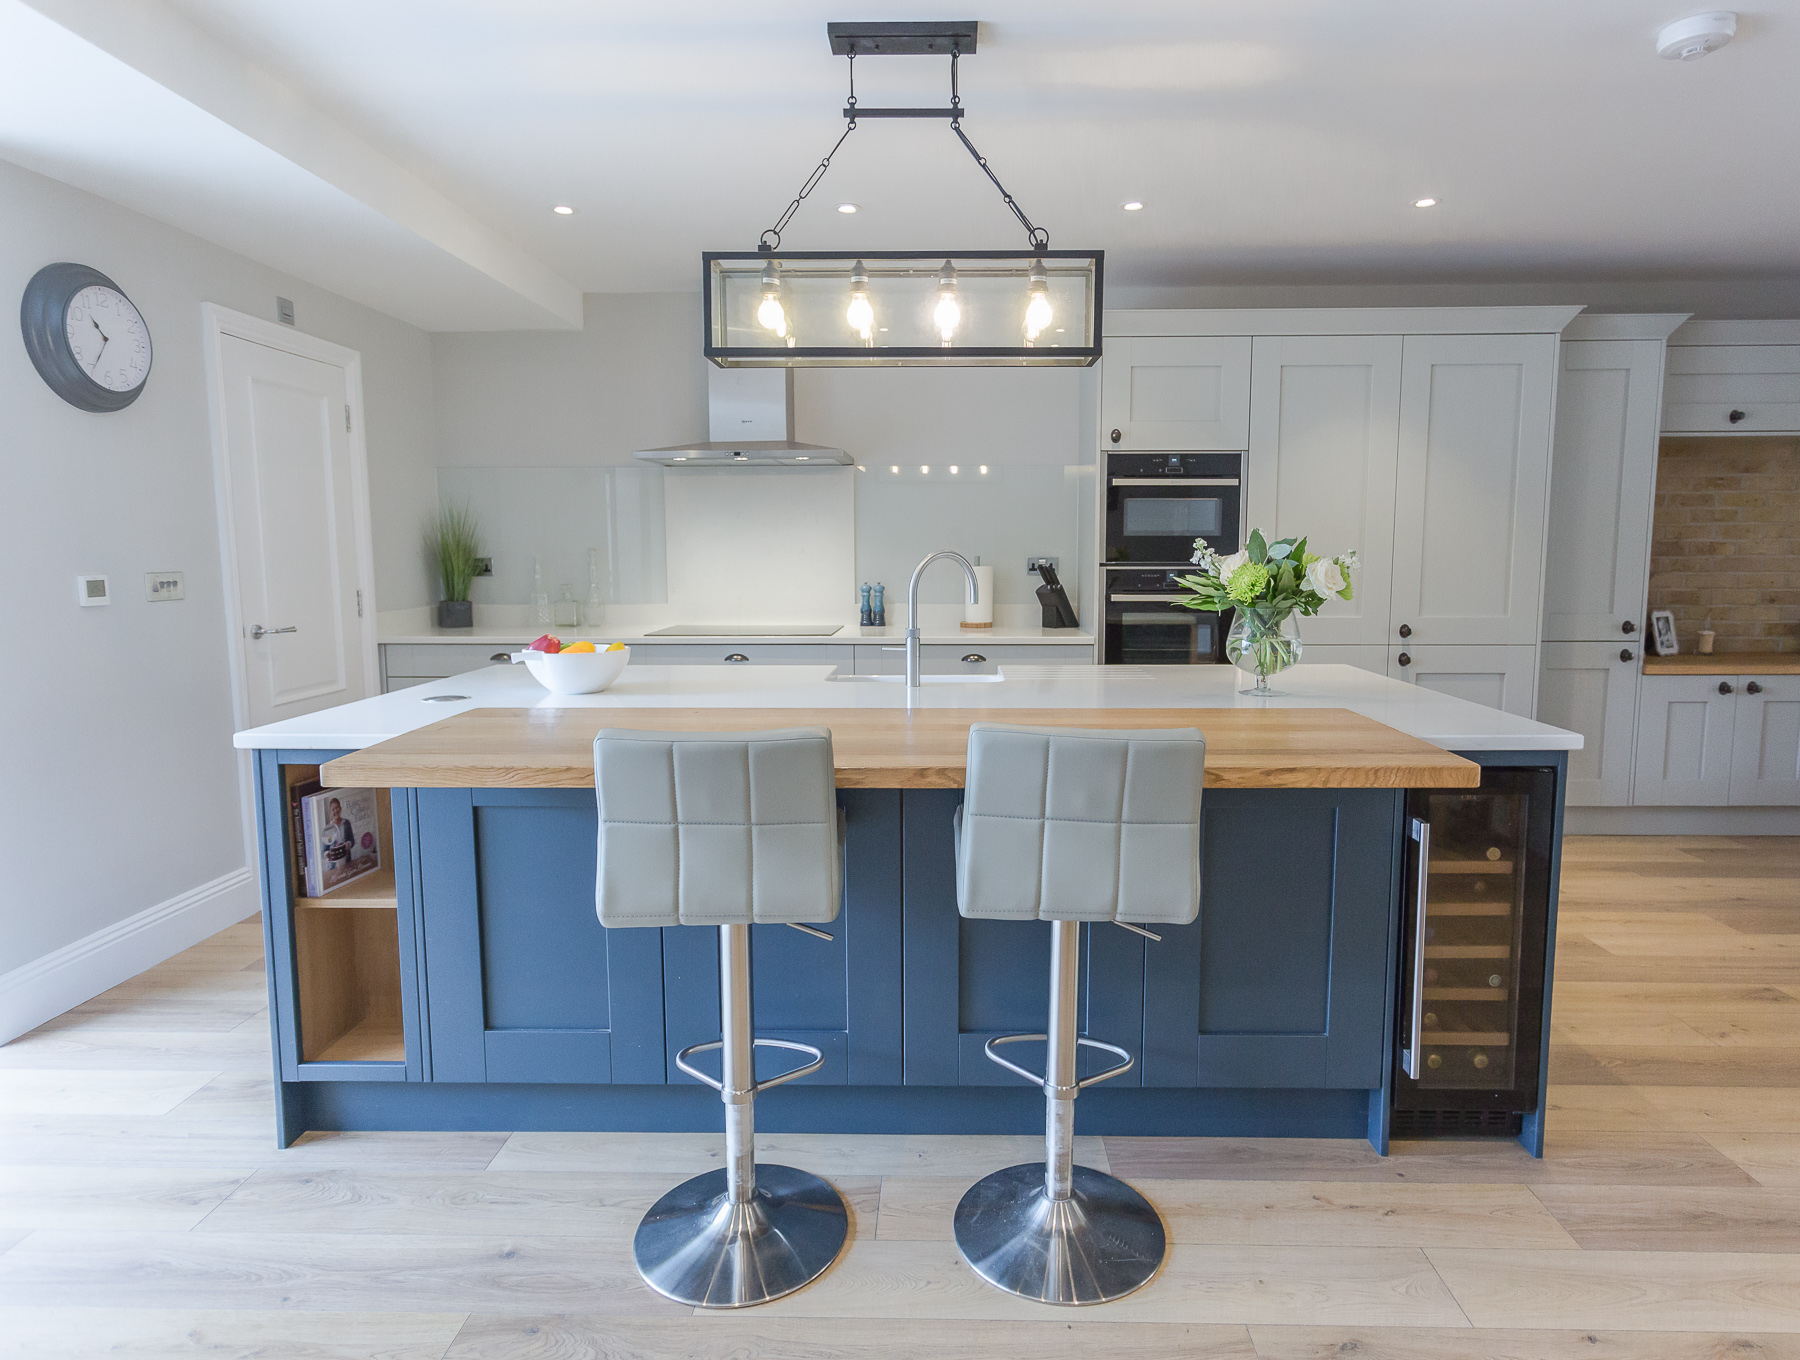 C&C kitchens Hertfordshire - Milbourne Hartforth Blue & Partridge Grey